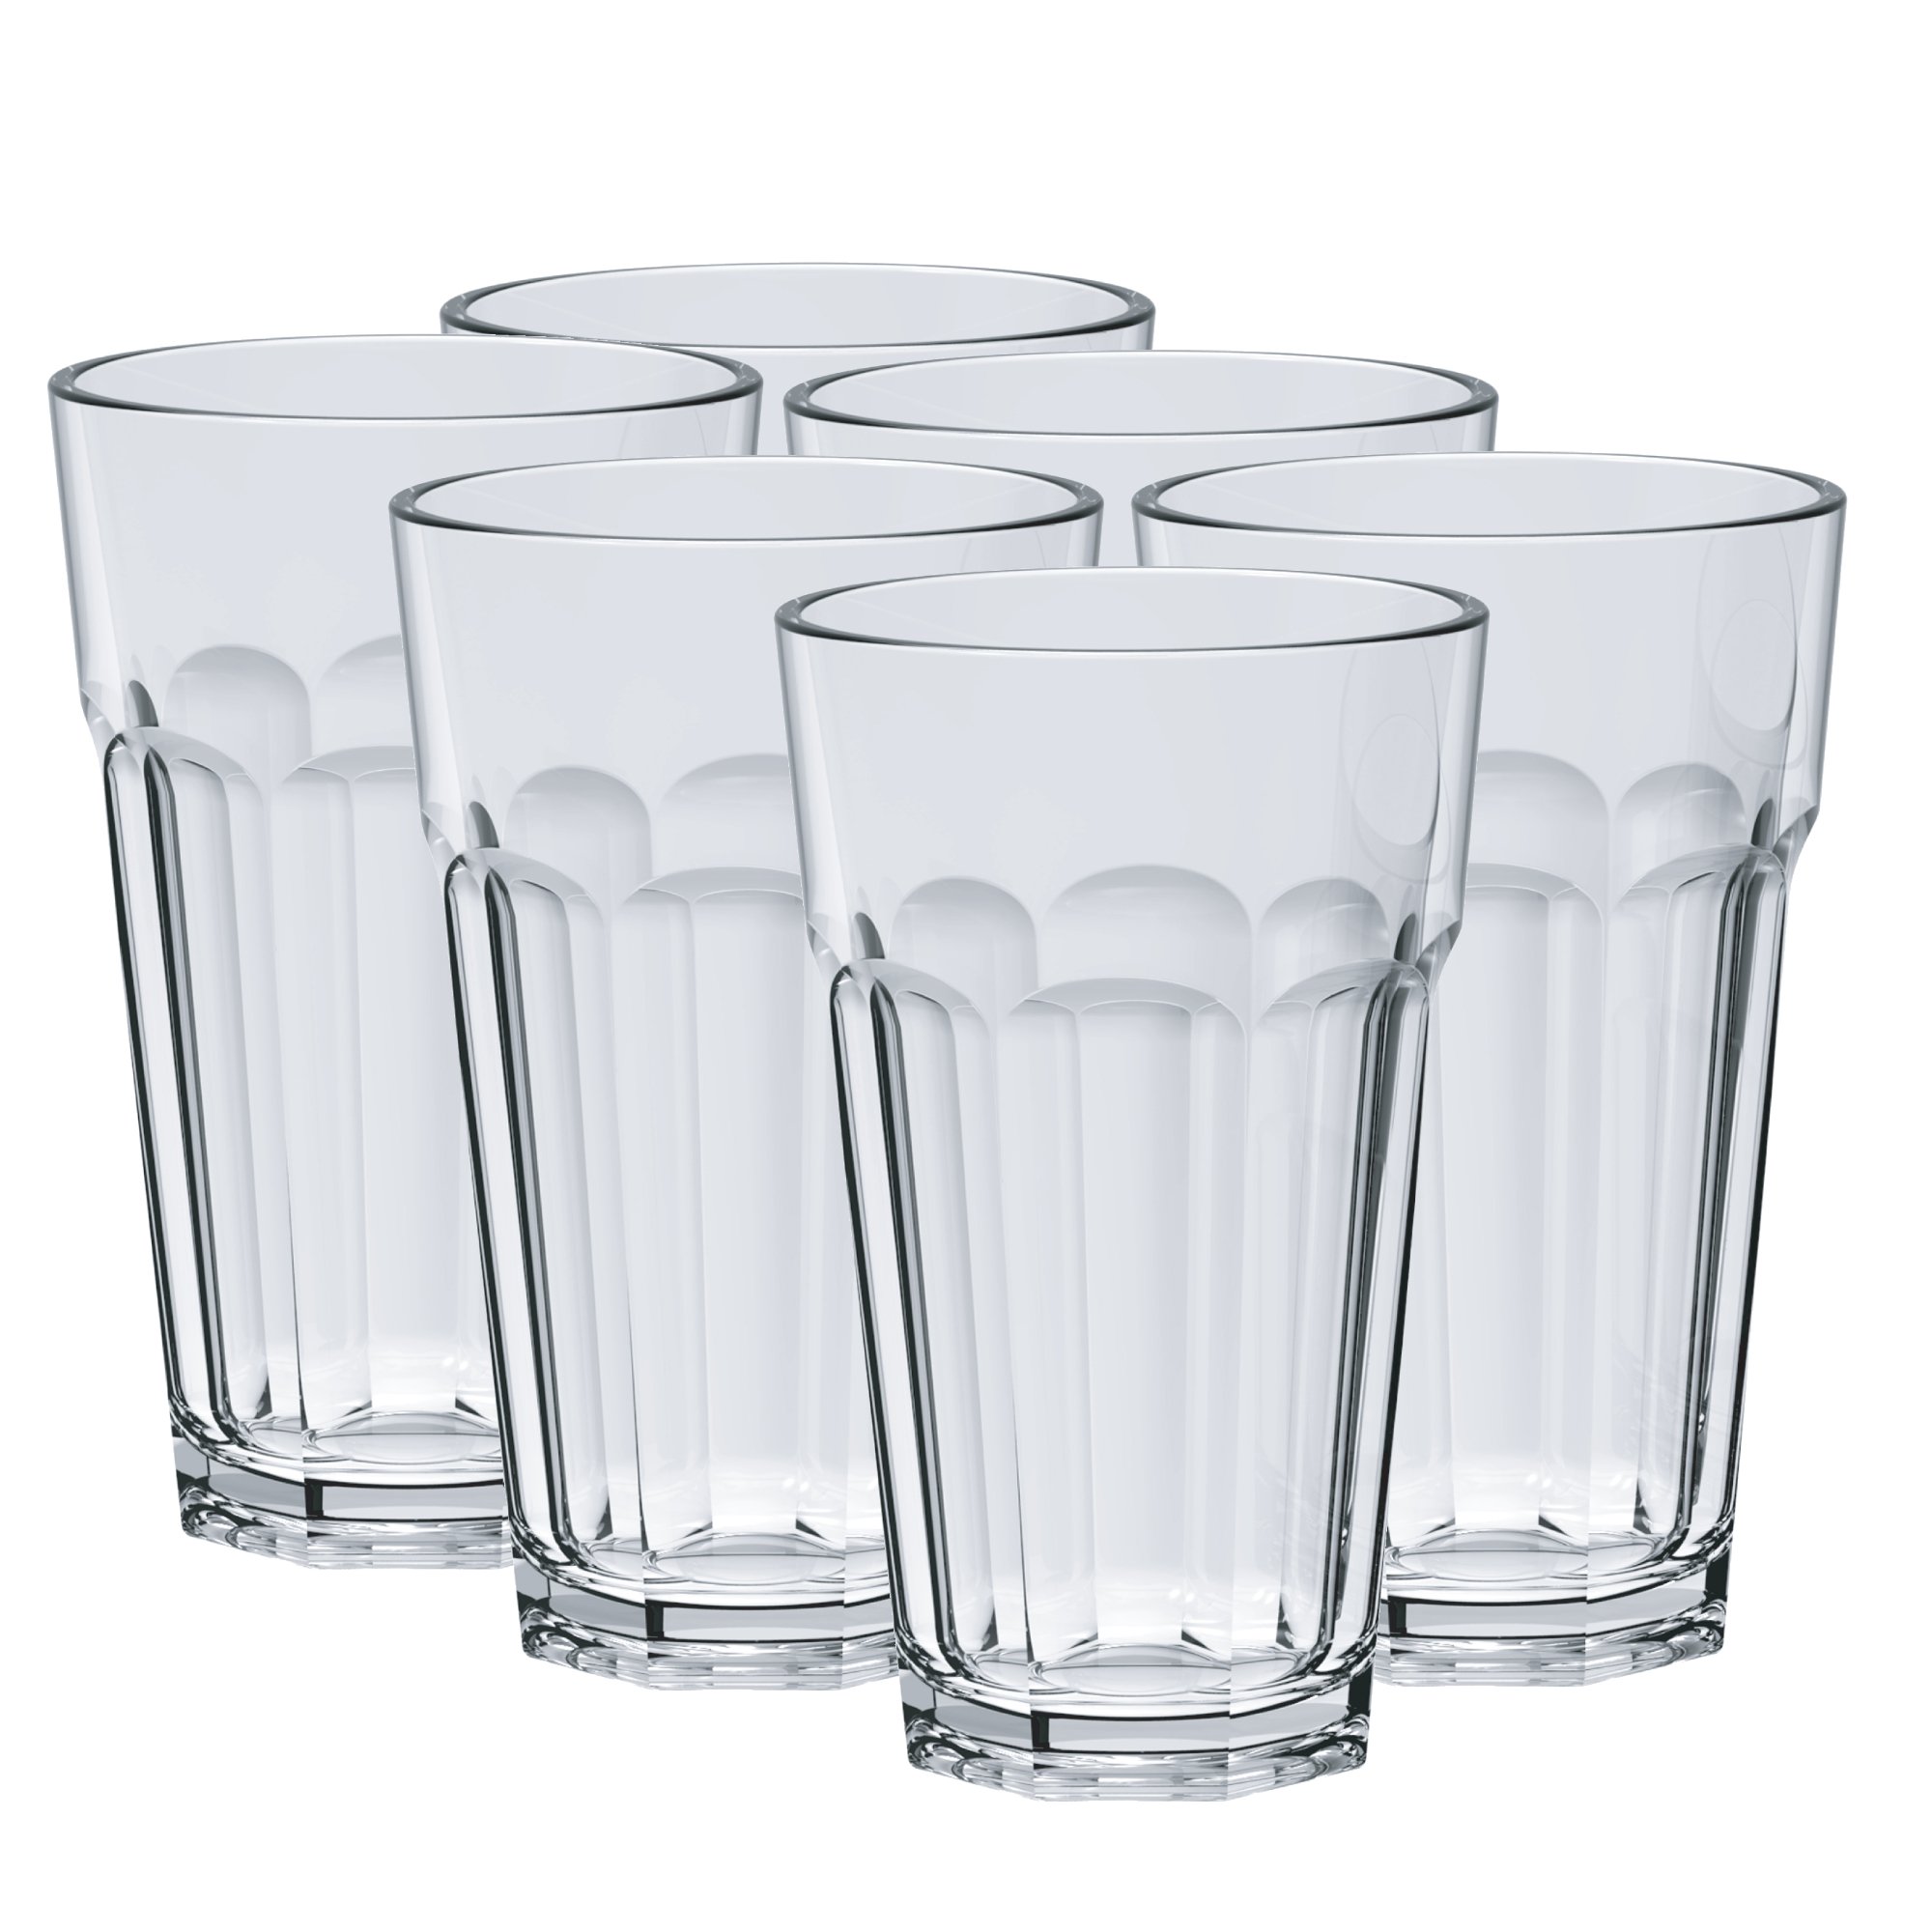 Acrylic Drinking Glasses Drinking Cups Tumbler Glassware Set Of 6 Ebay